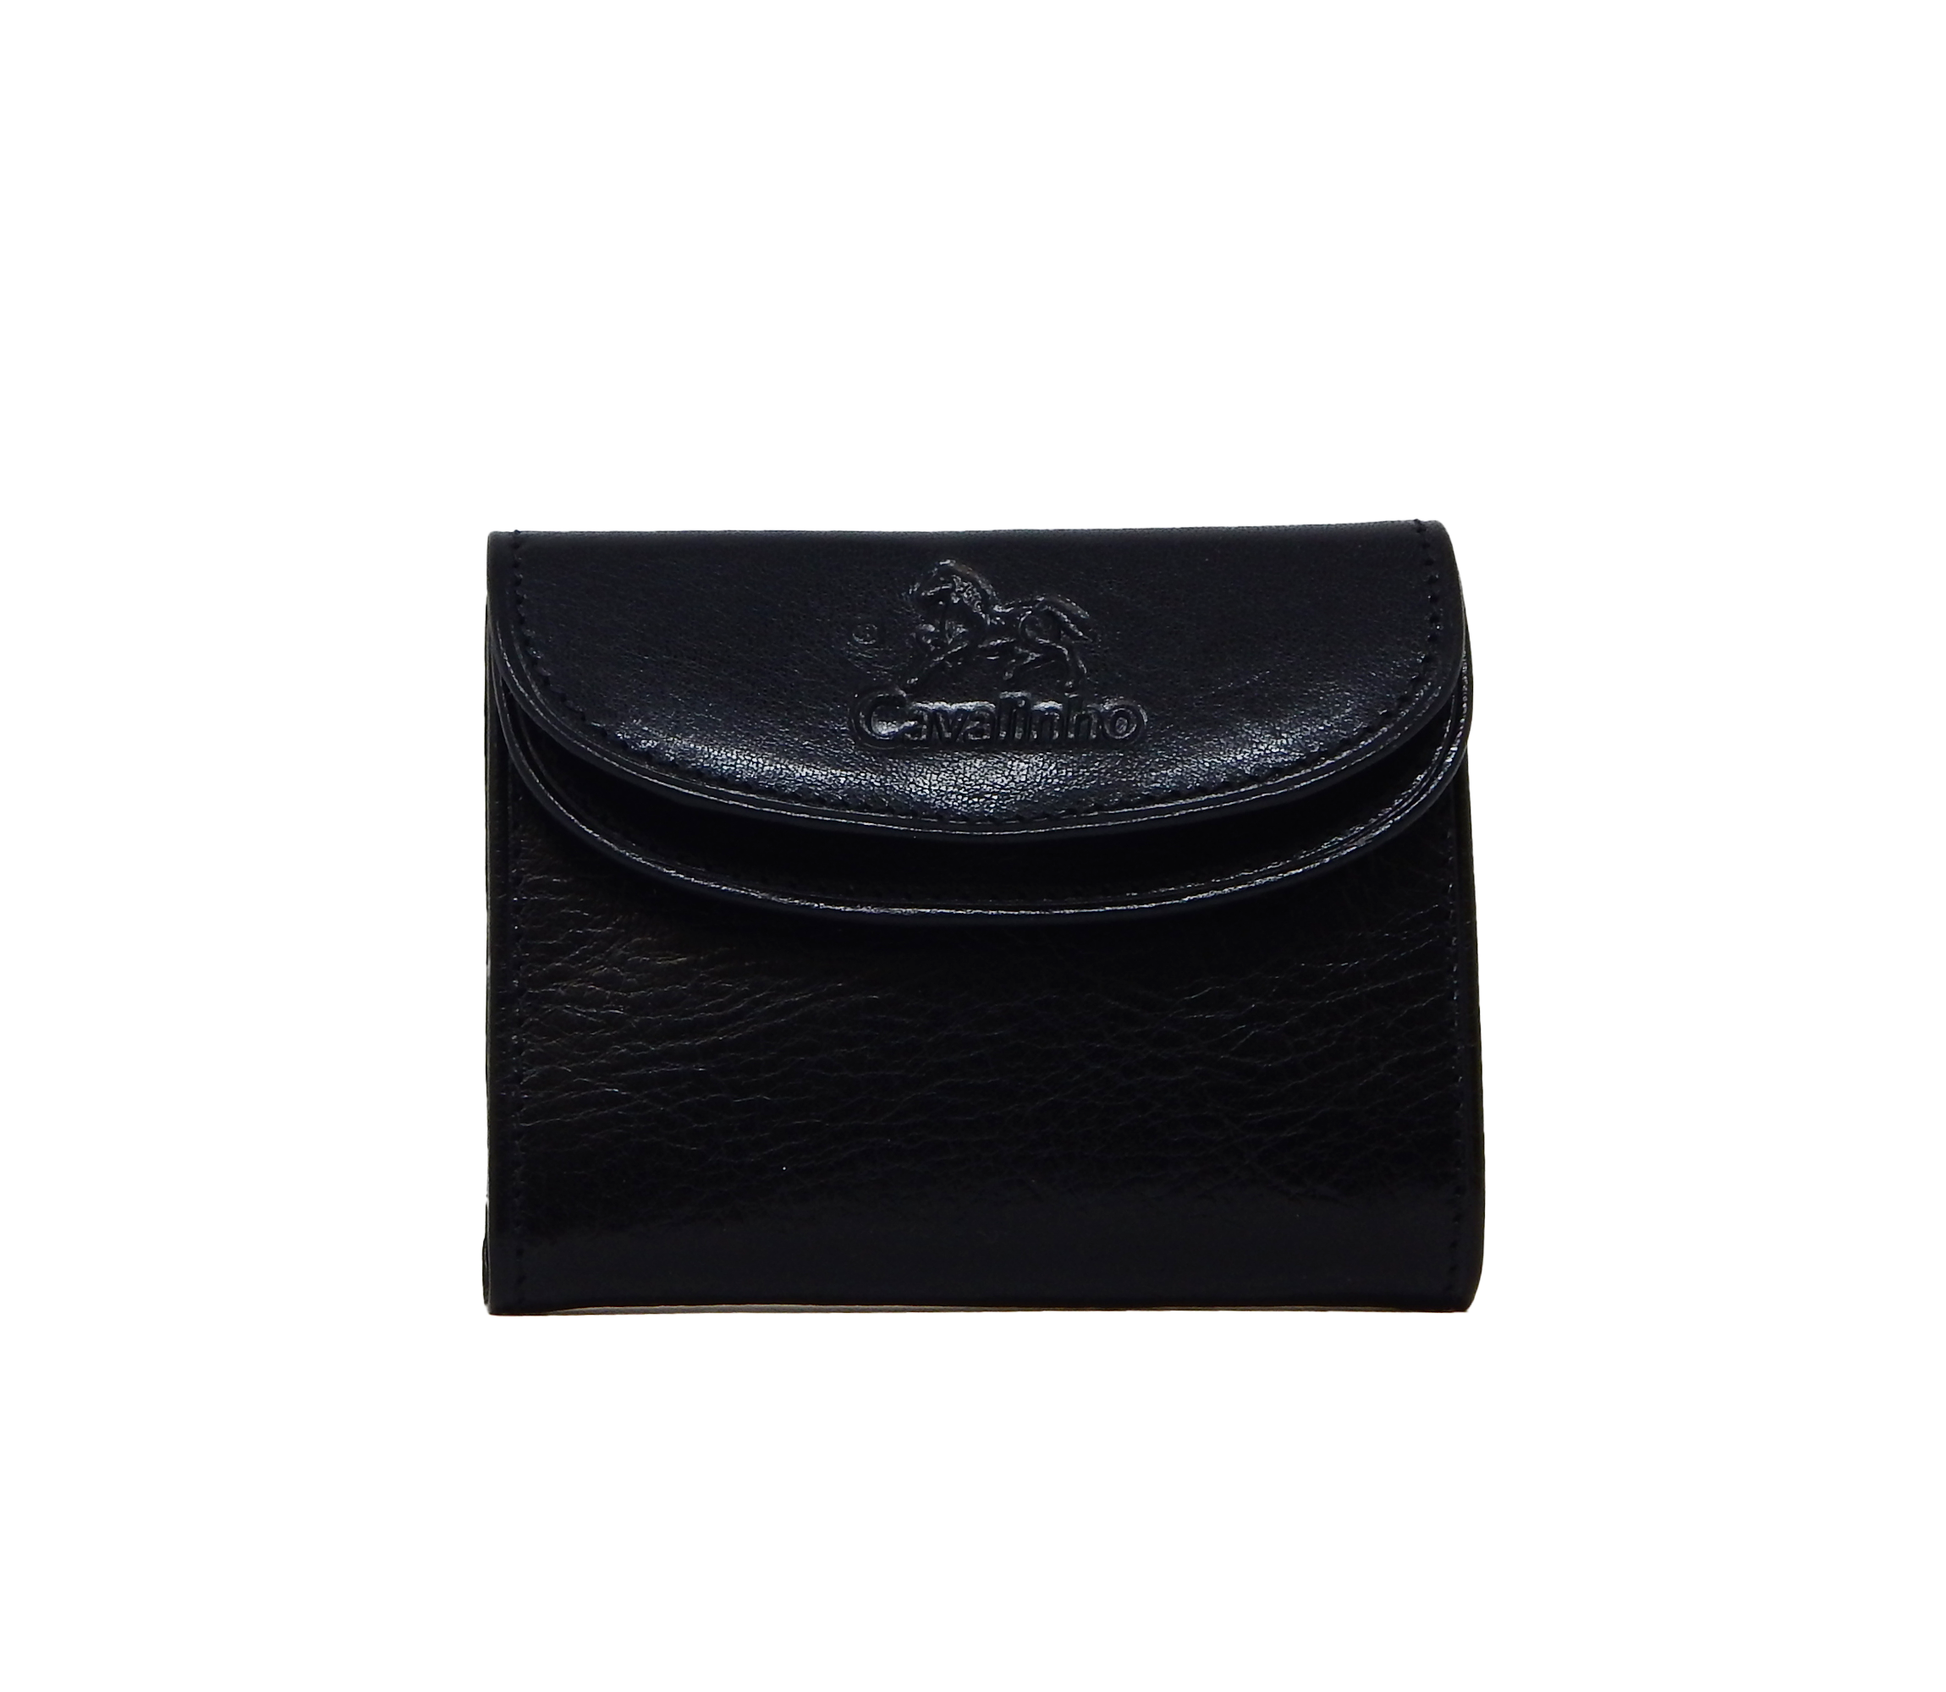 #color_ Black | Cavalinho Men's Compact Leather Wallet - Black - 28610574.01_1